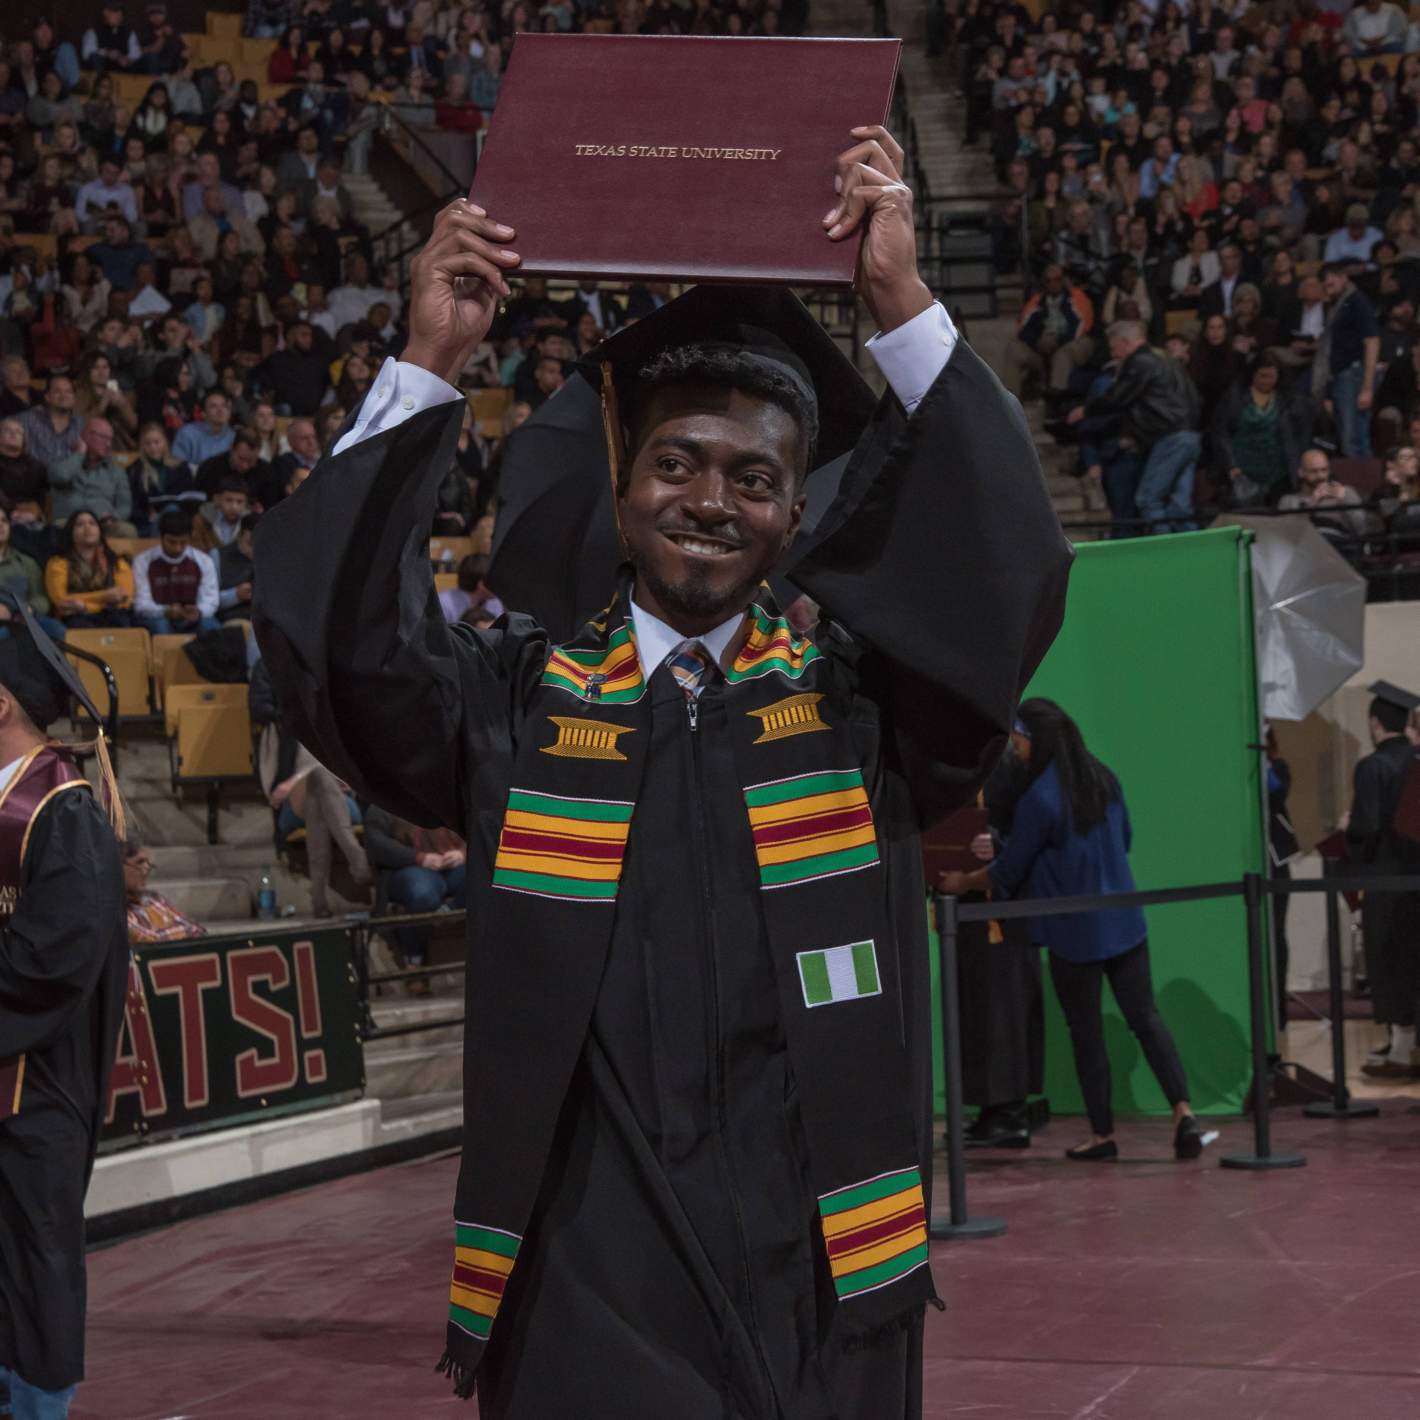 graduate smiling, holding diploma overhead